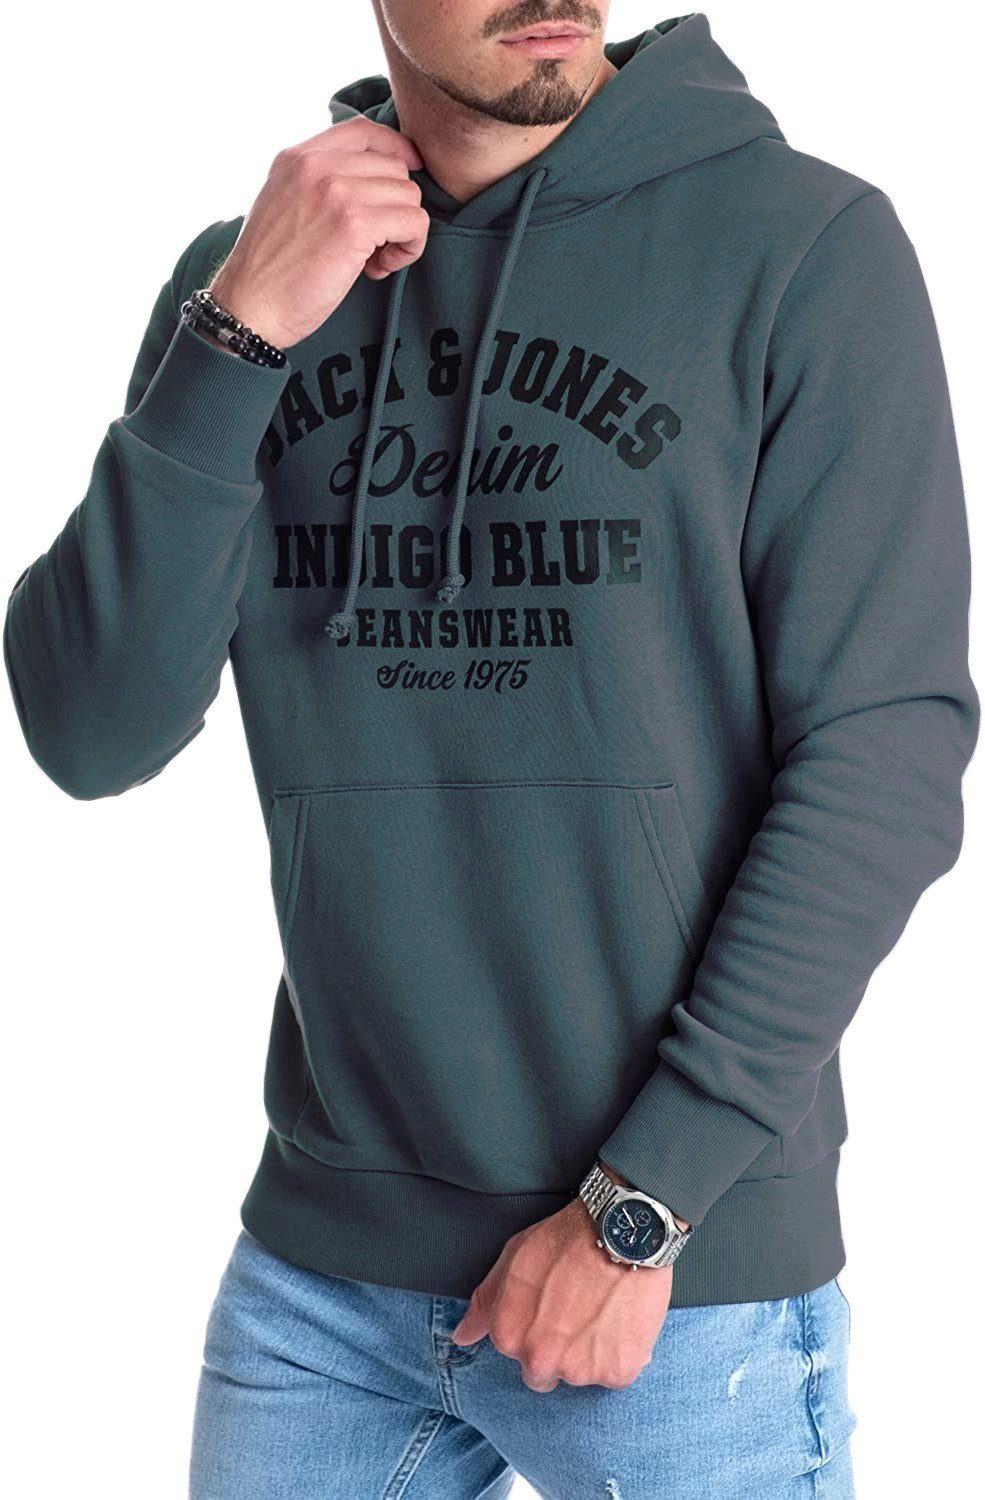 Unifarbe Dark & Kängurutasche, T-Shirt Kapuze, in Slate-Black mit Jack Jones Logodruck, mit